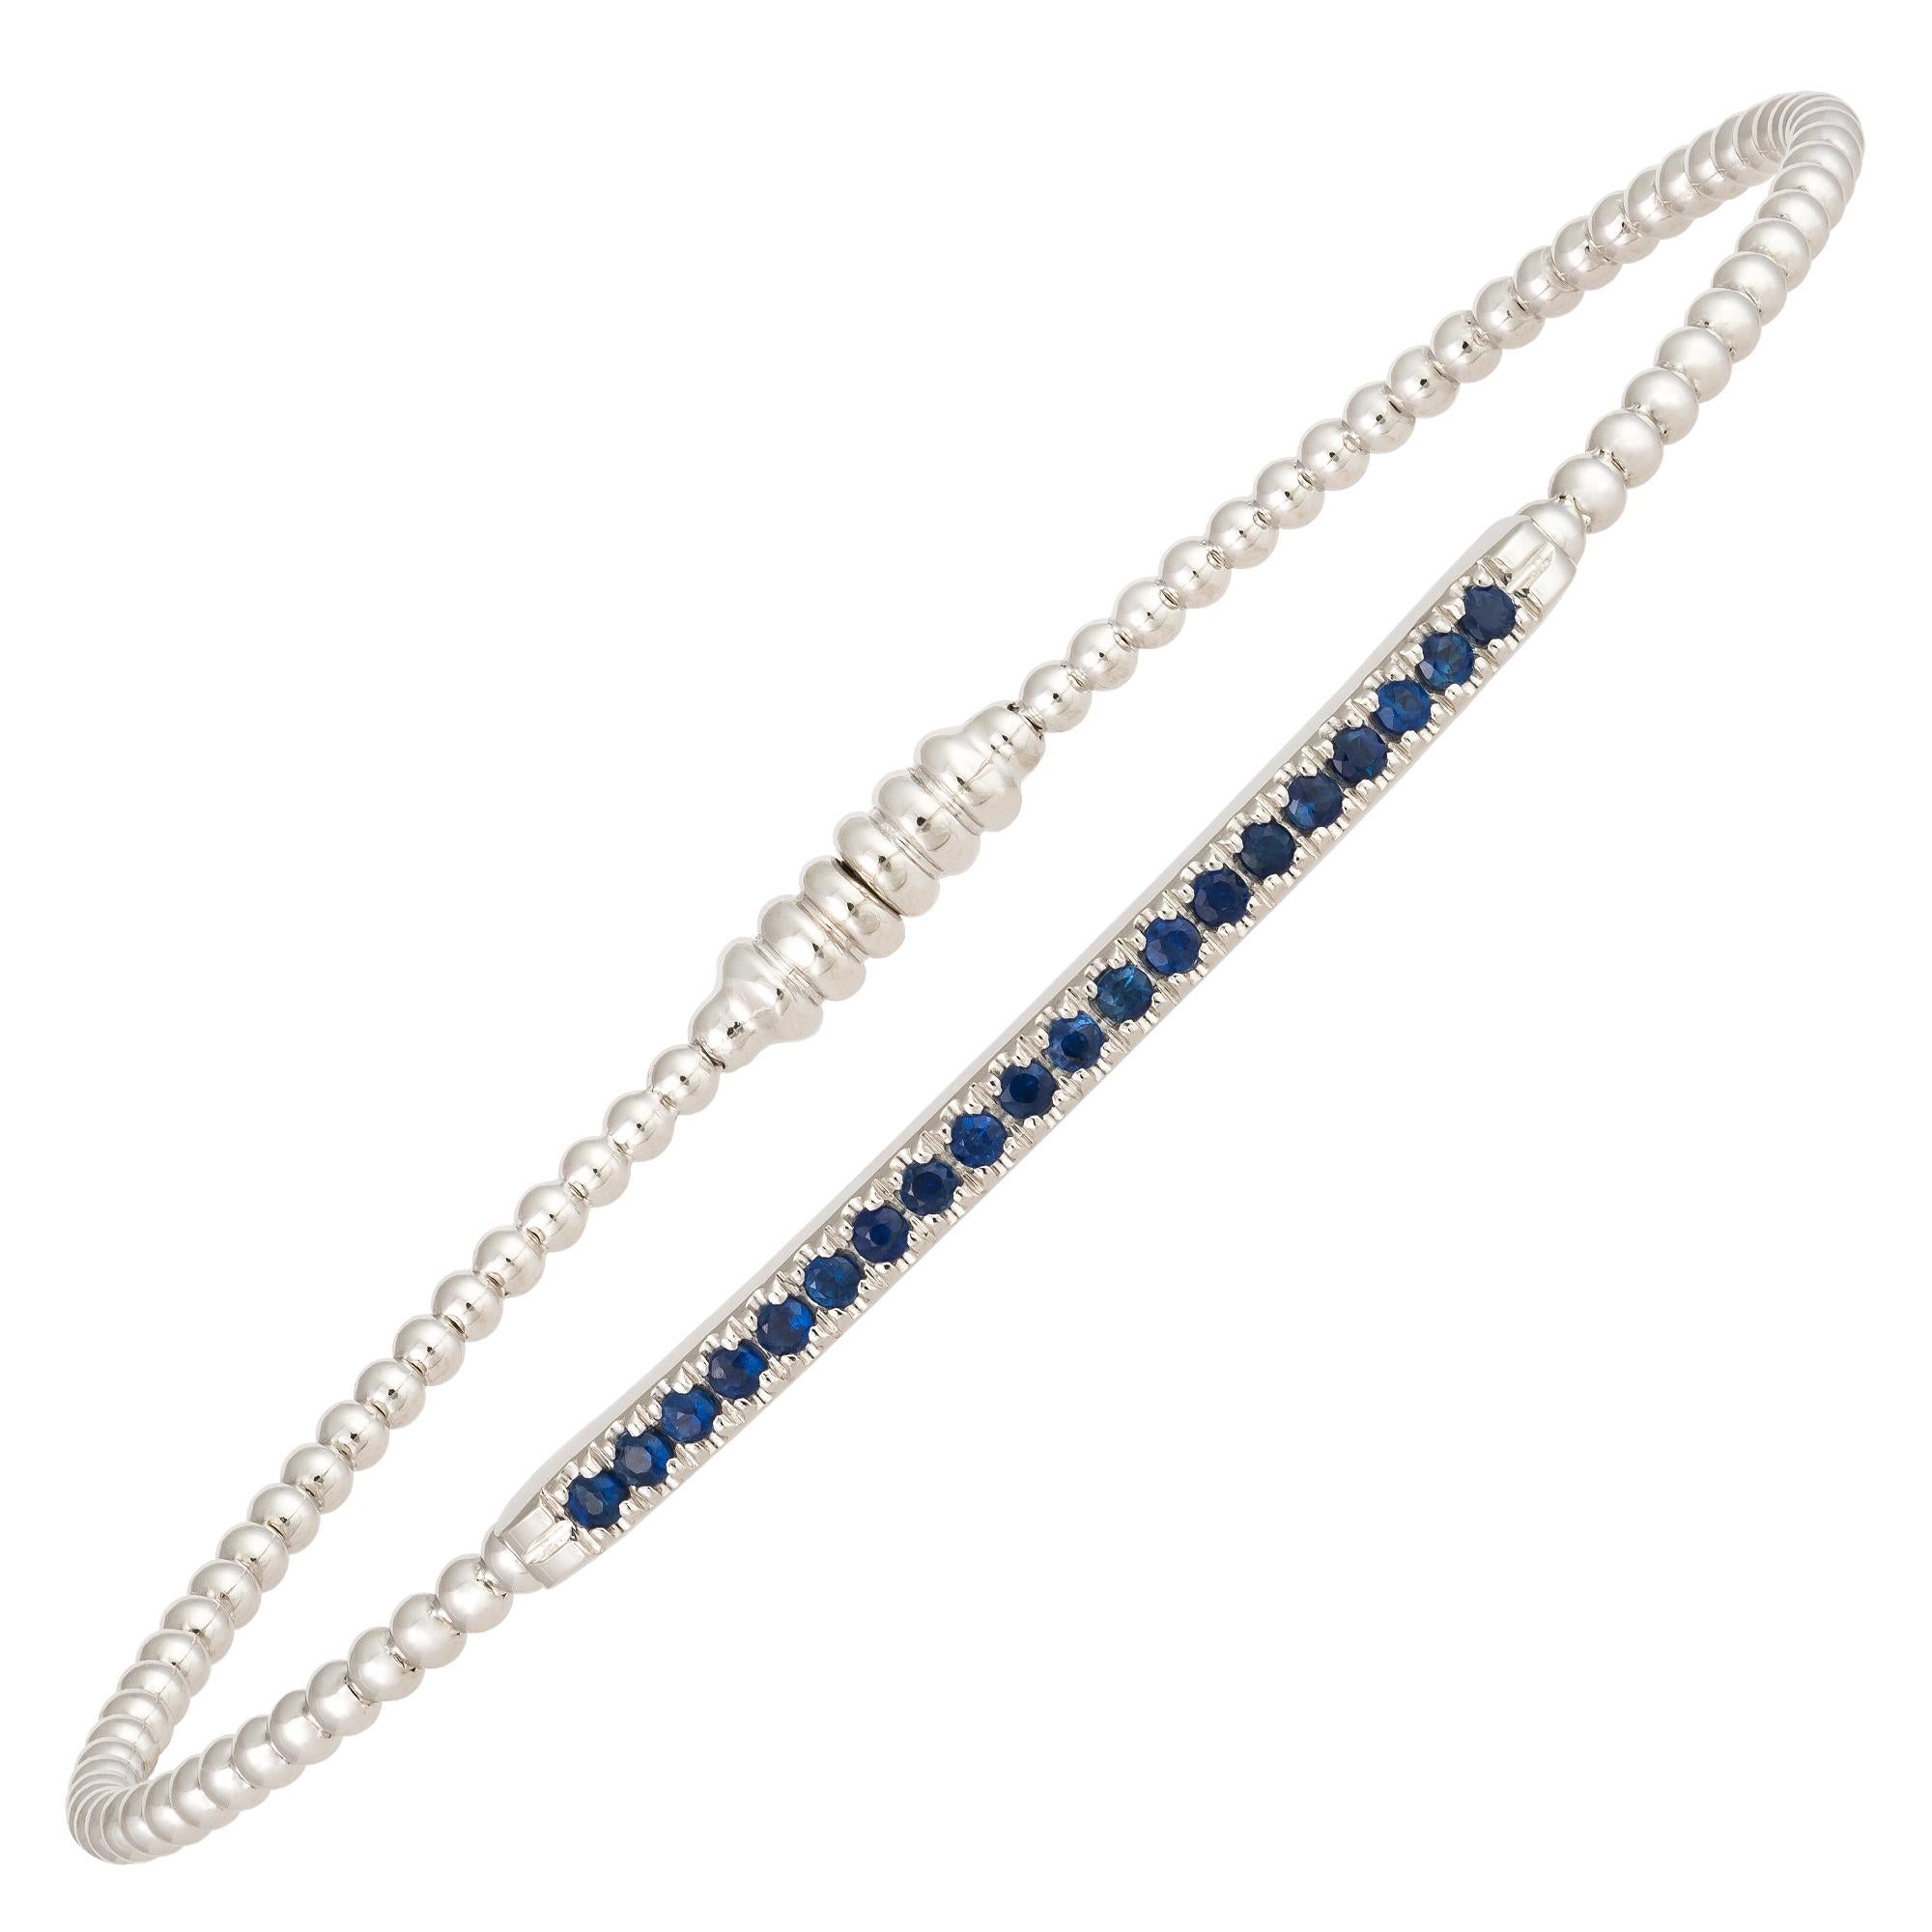 Modern Unique Blue Sapphires Bangle Bracelet White Gold 18K for Her For Sale